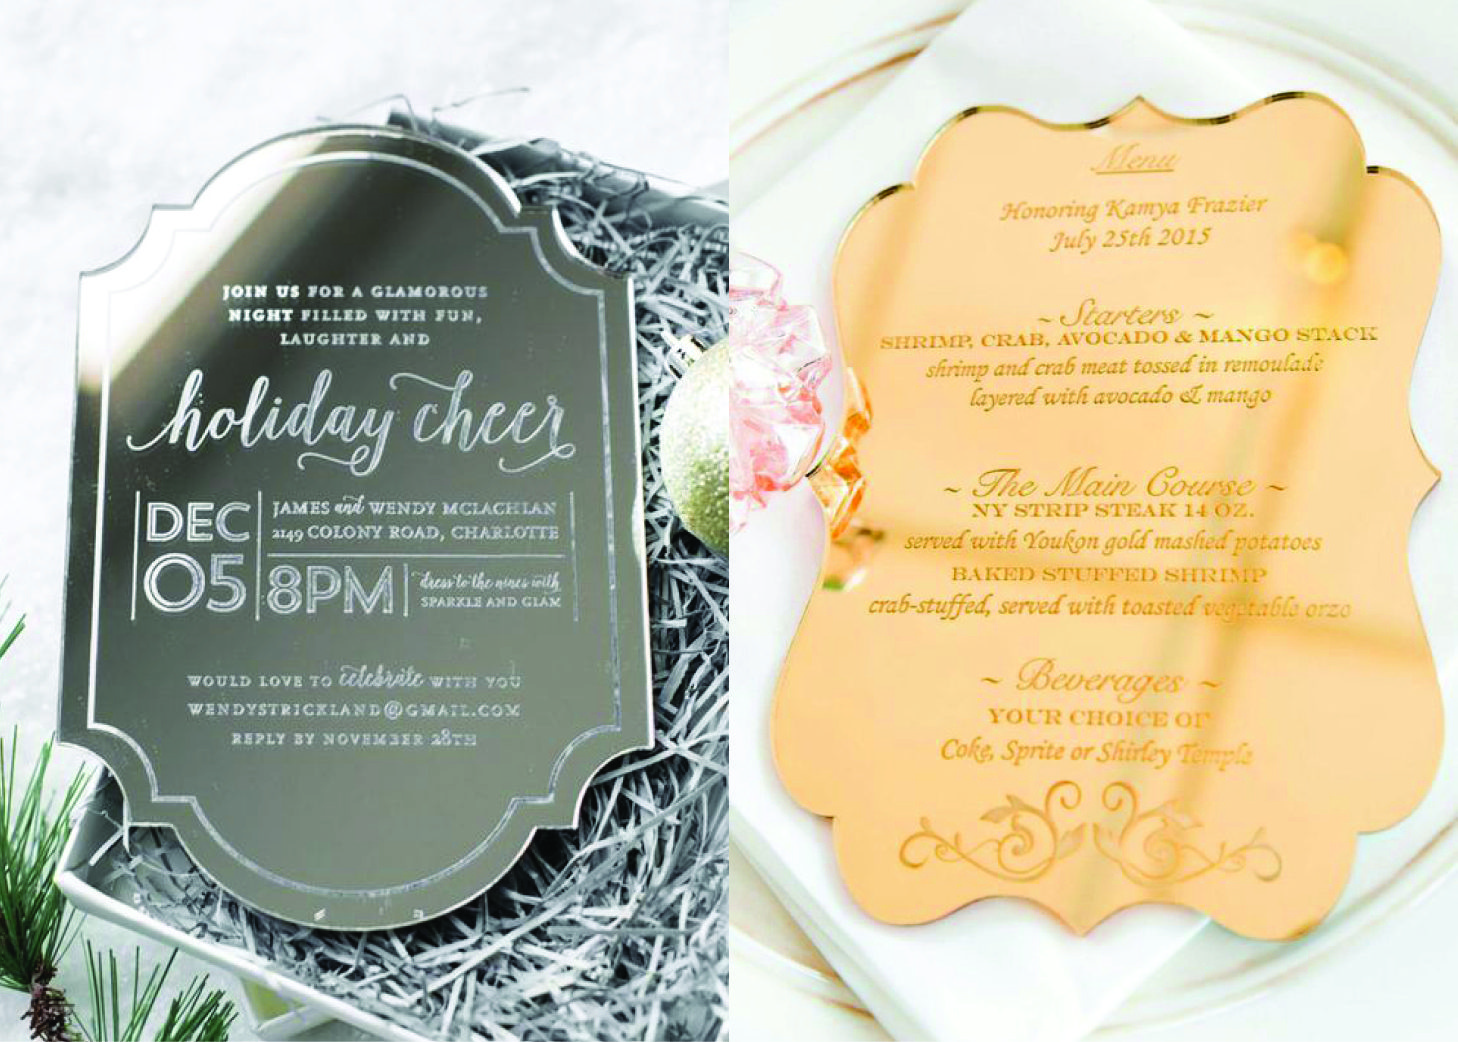 25 Beautiful Mirror Wedding Ideas by Doltone House